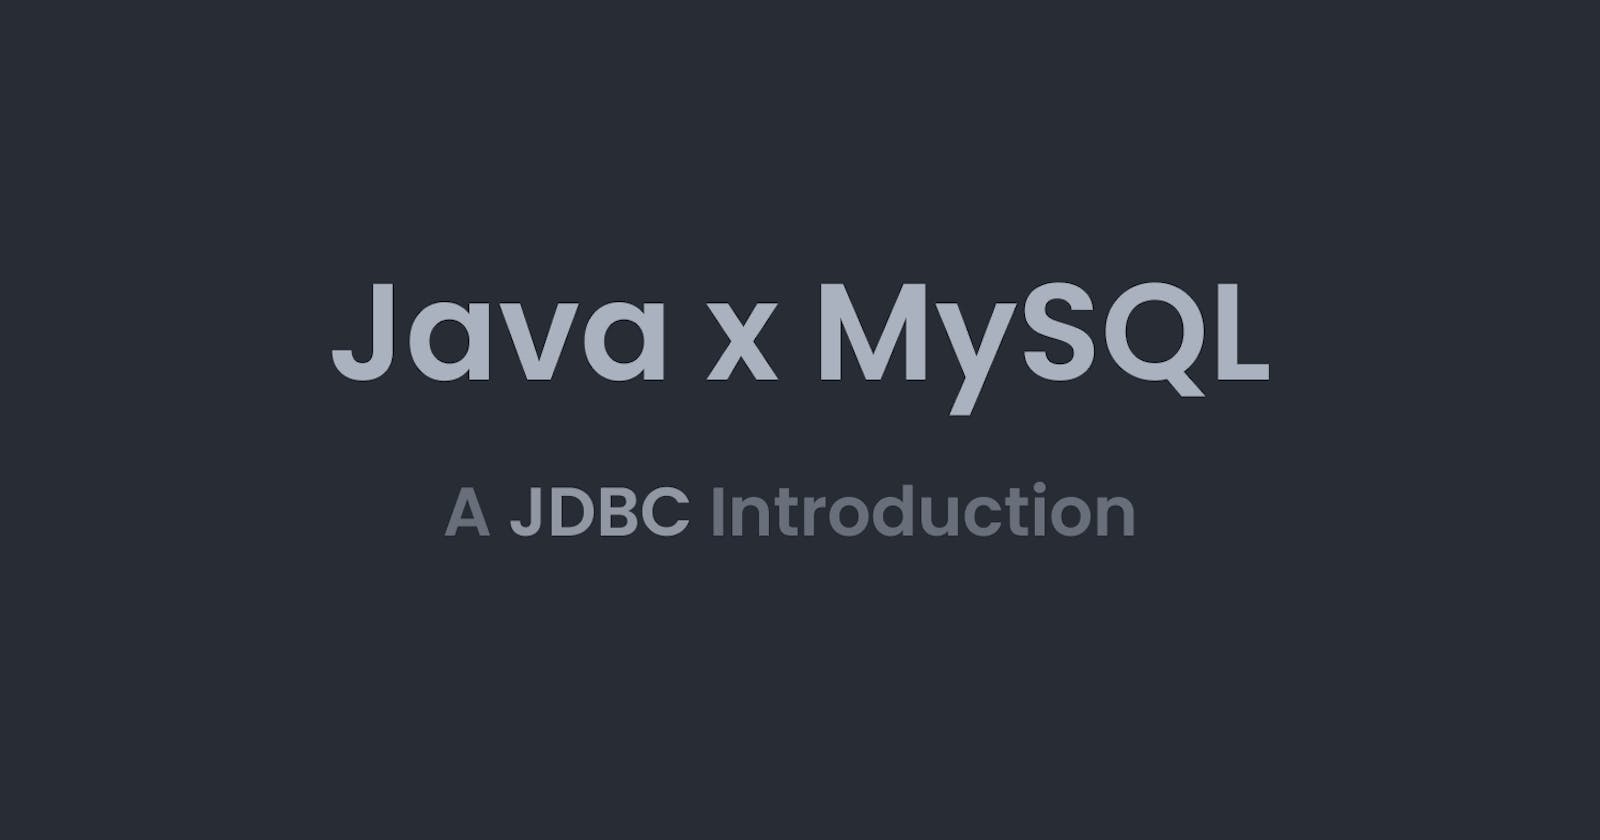 Java and MySQL - A JDBC Introduction